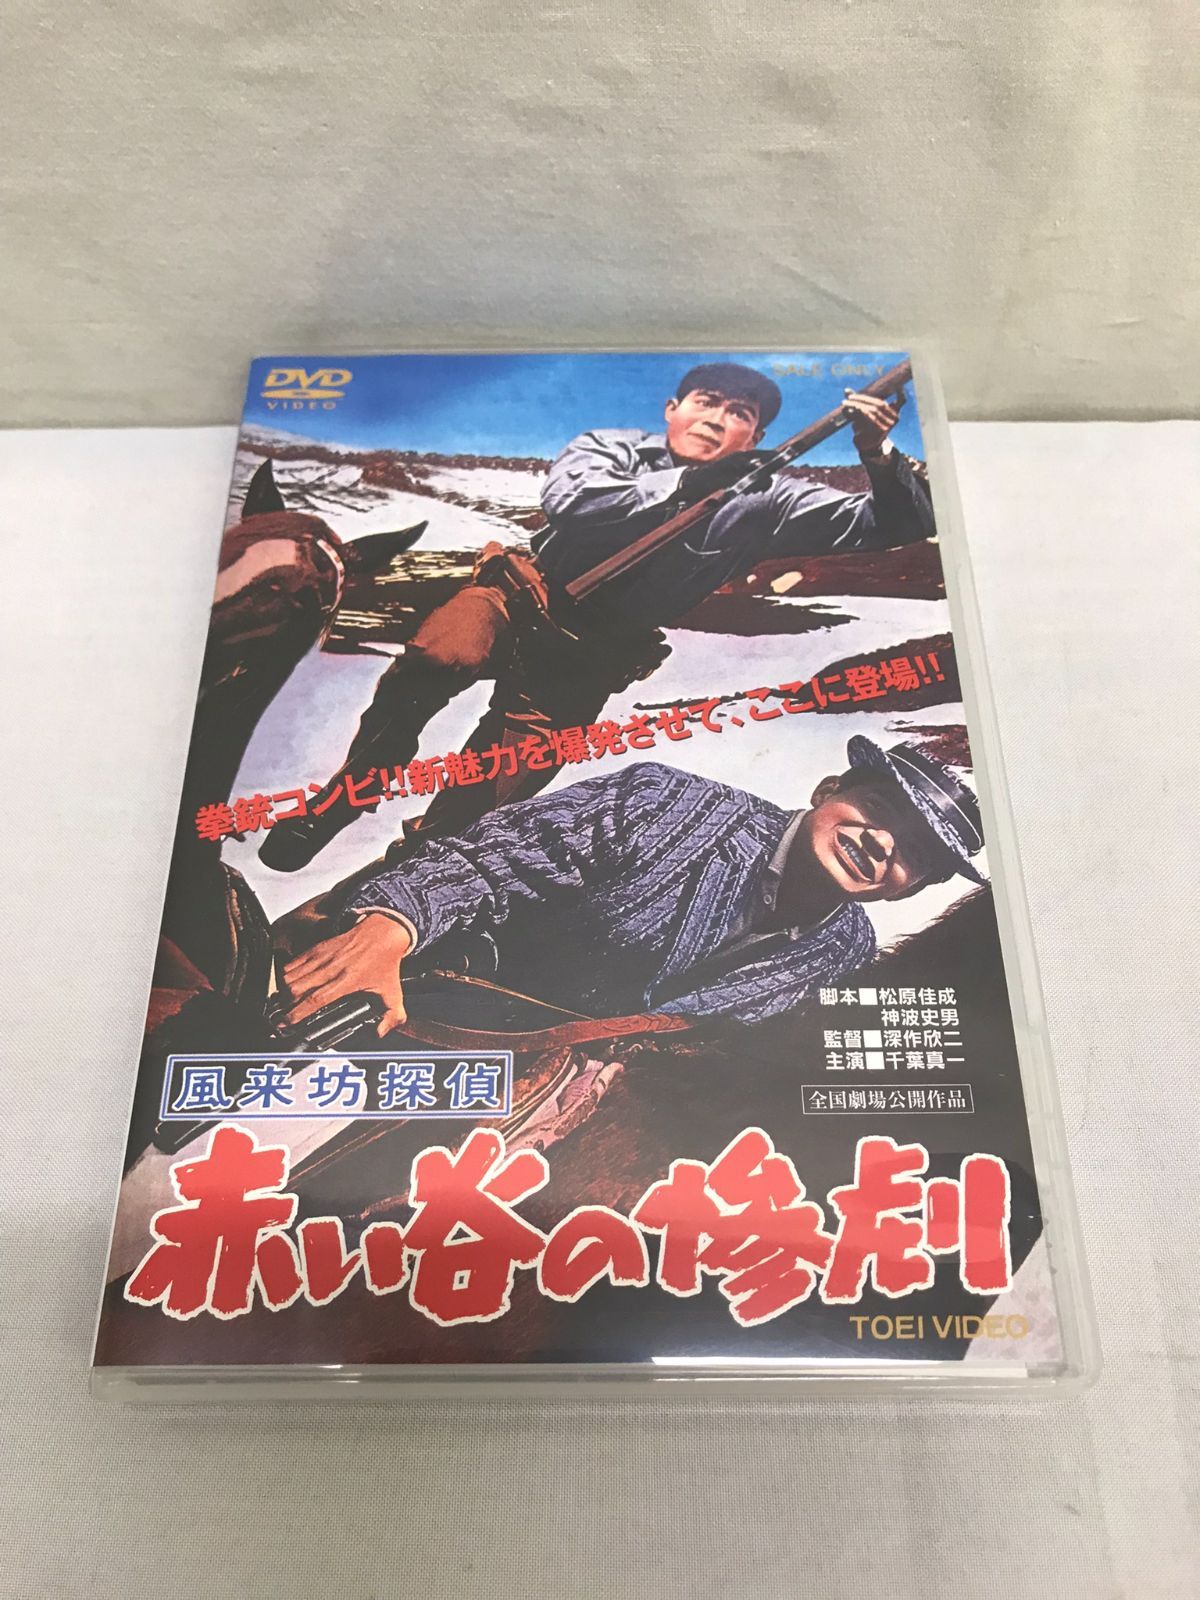 DVD 2本 斬り抜ける VOL.1 + VOL.2 1巻+2巻 近藤正臣 - TVドラマ